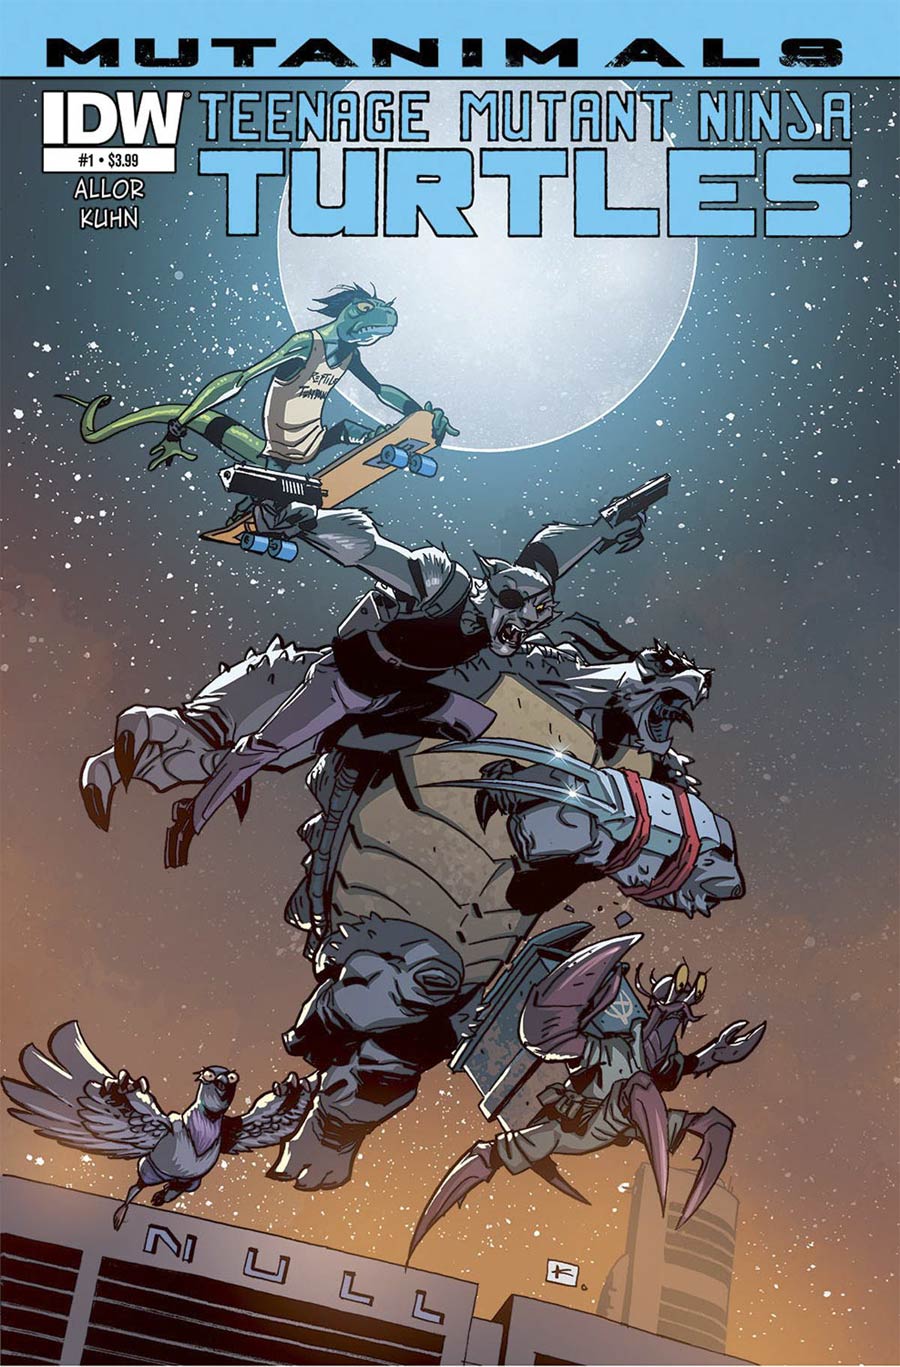 Teenage Mutant Ninja Turtles Mutanimals #1 Cover A Regular Andy Kuhn Cover